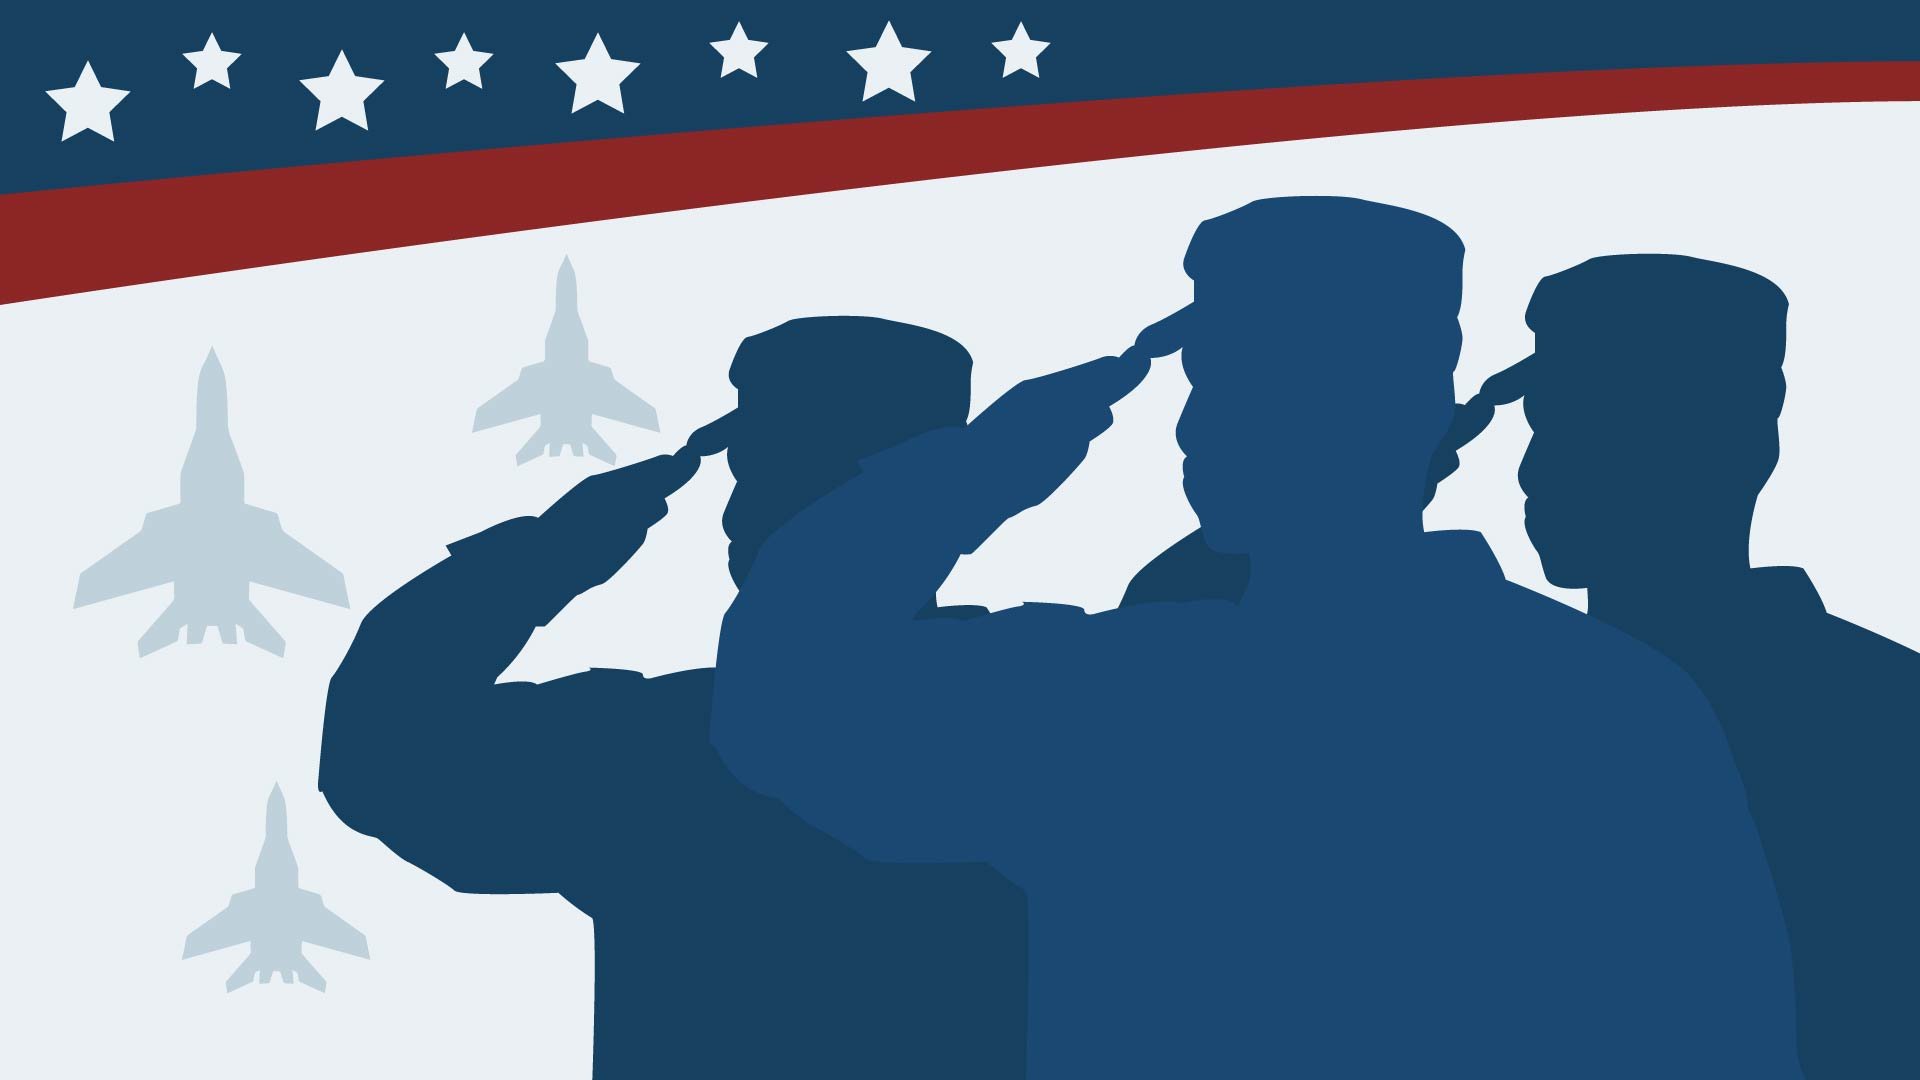 Free Armed Forces Day Wallpaper Background in PDF, Illustrator, PSD, EPS, SVG, JPG, PNG